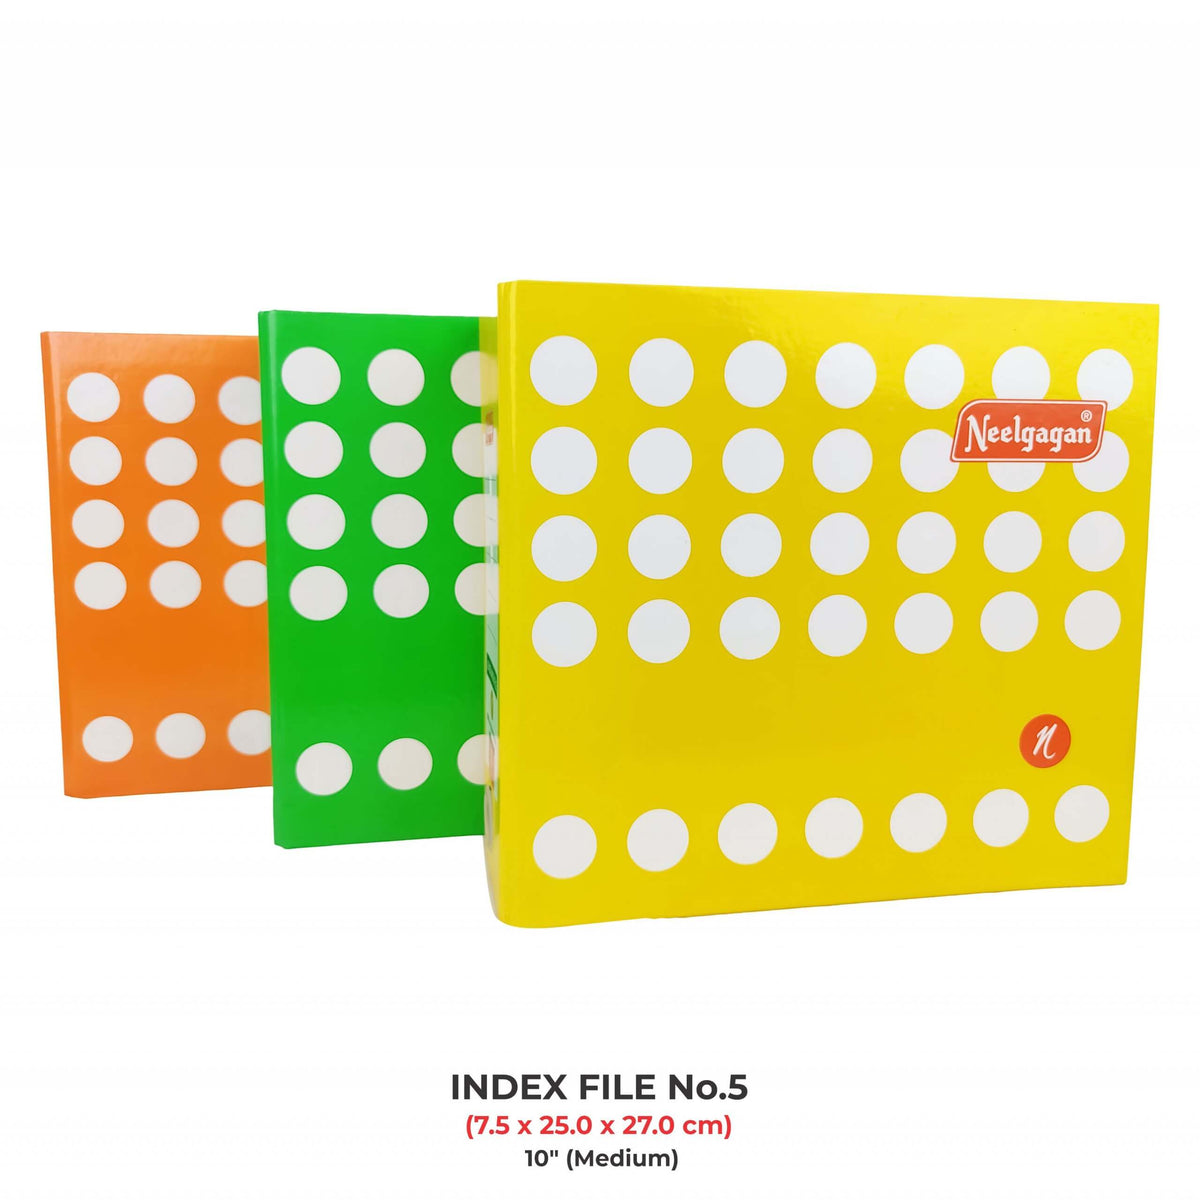 Index File (Printed) (Lever Arch - Box File) No.5 (10 inch - Medium)